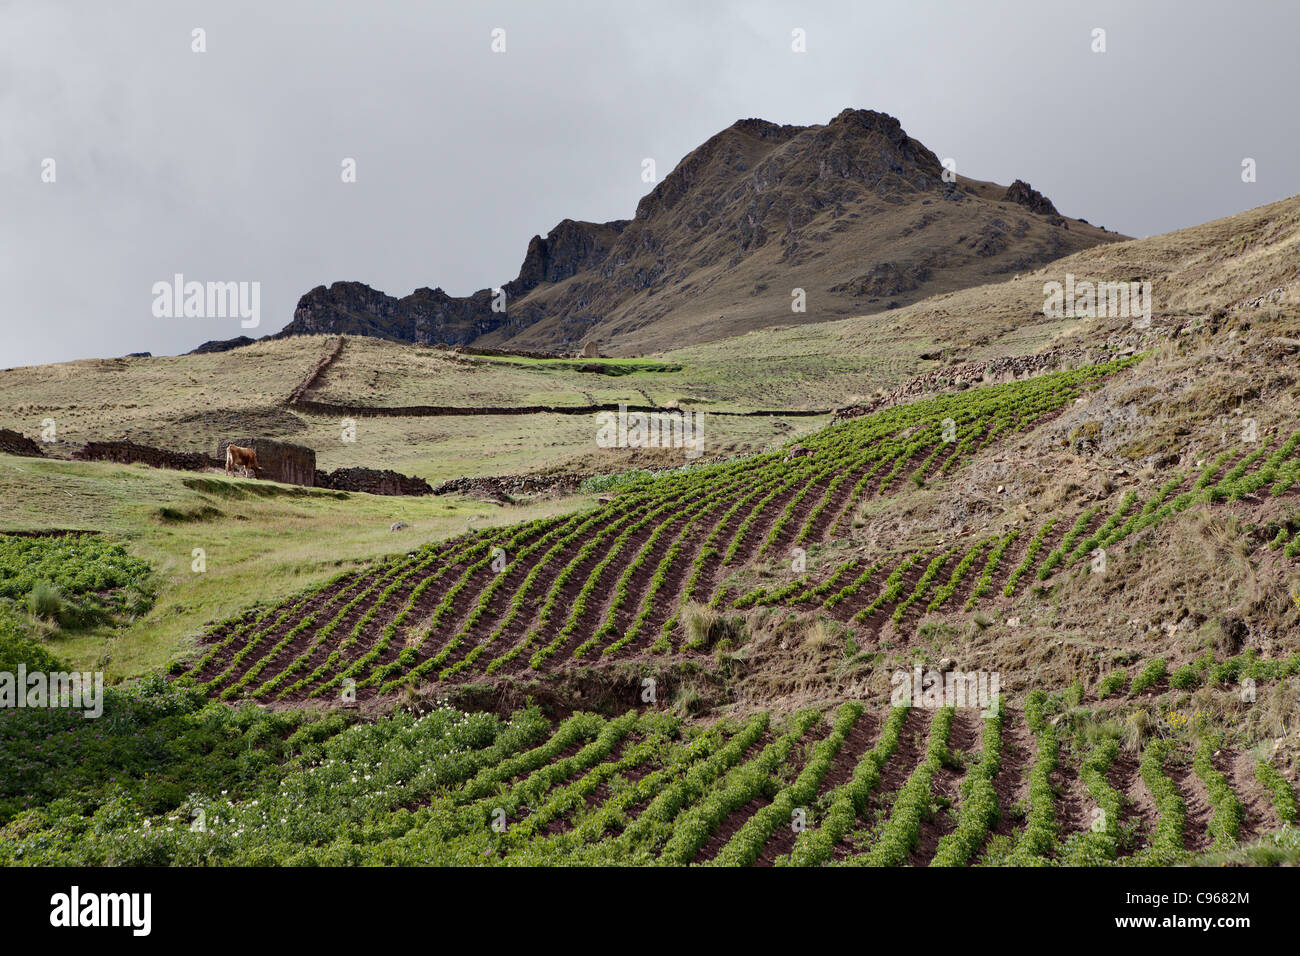 Potato fields near Pampallaqta village, Andes mountains, Peru. Stock Photo